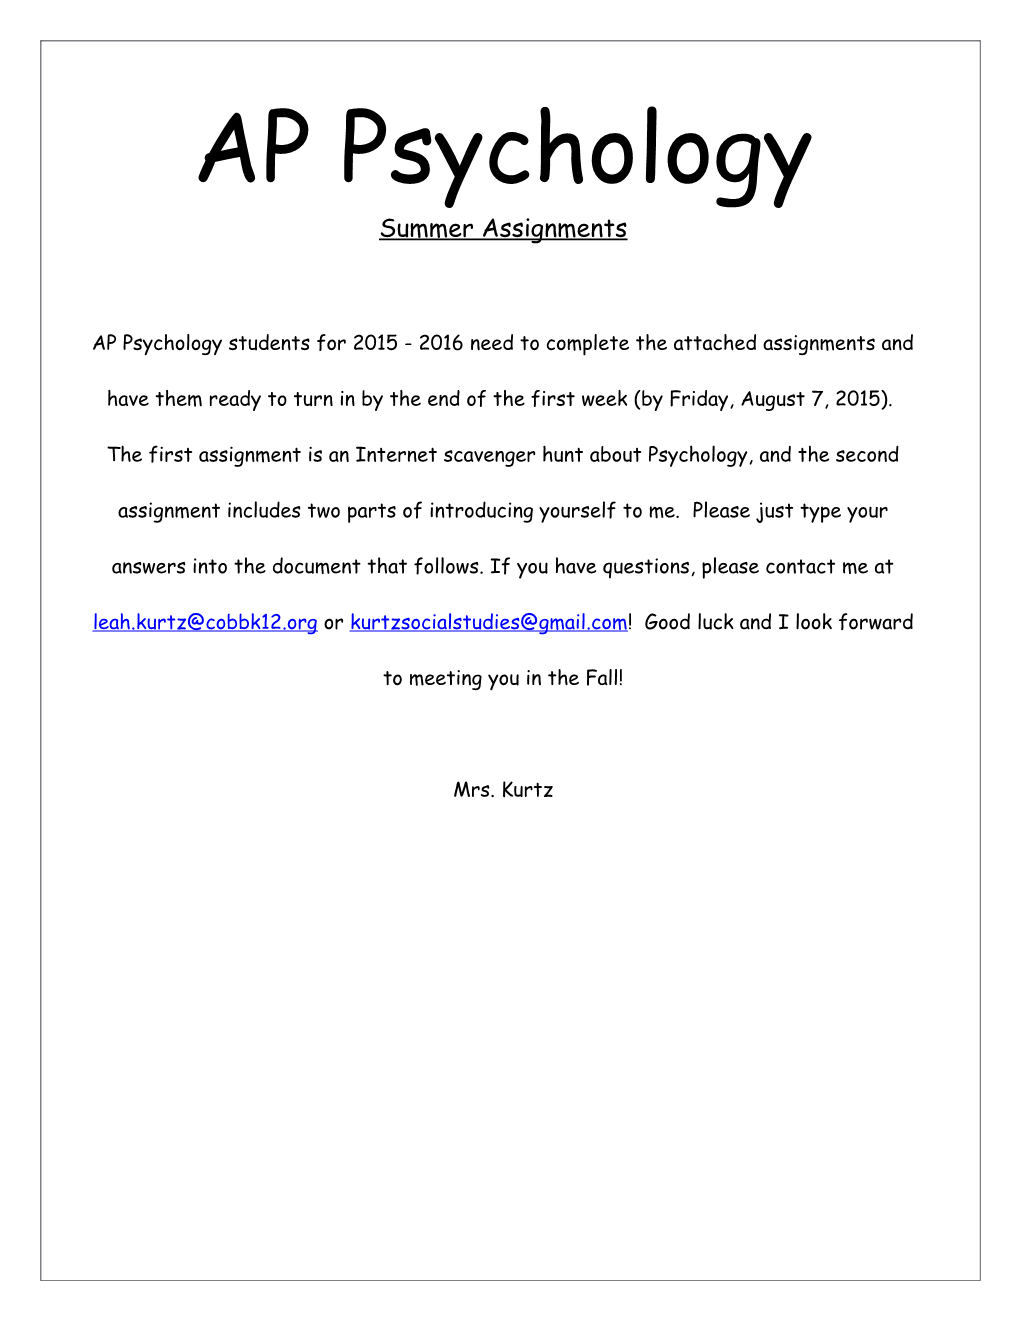 AP Psychology Summer Assignments